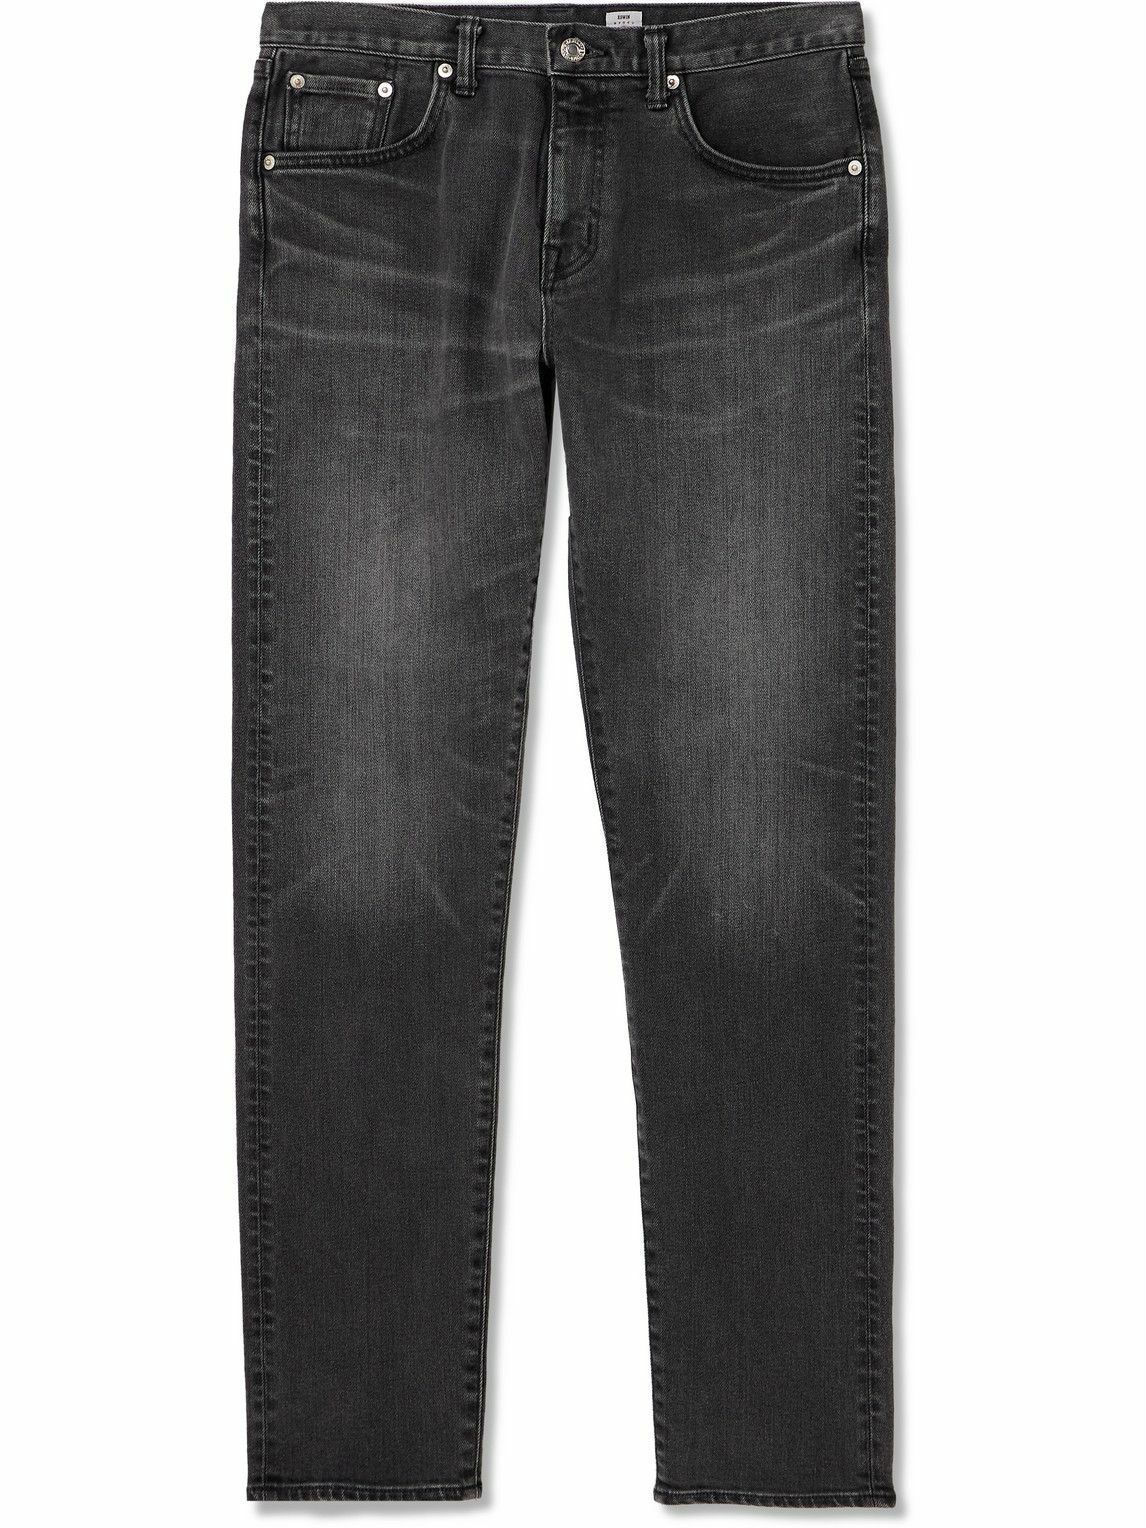 EDWIN - Slim-Fit Tapered Jeans - Black Edwin